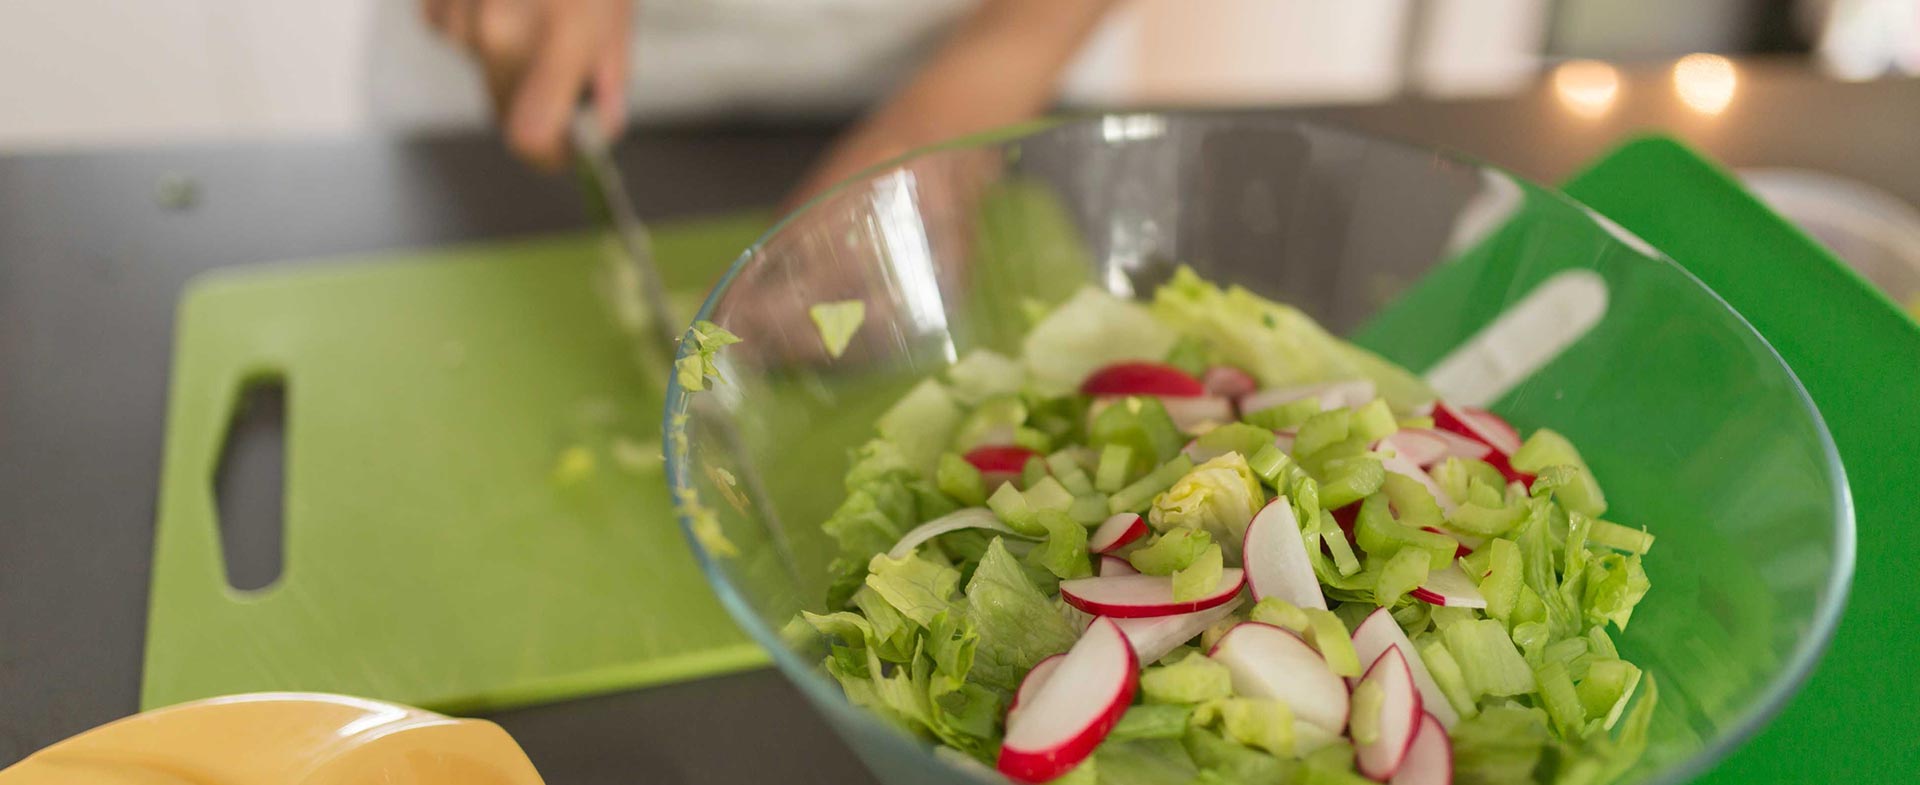 food safety salad chopping